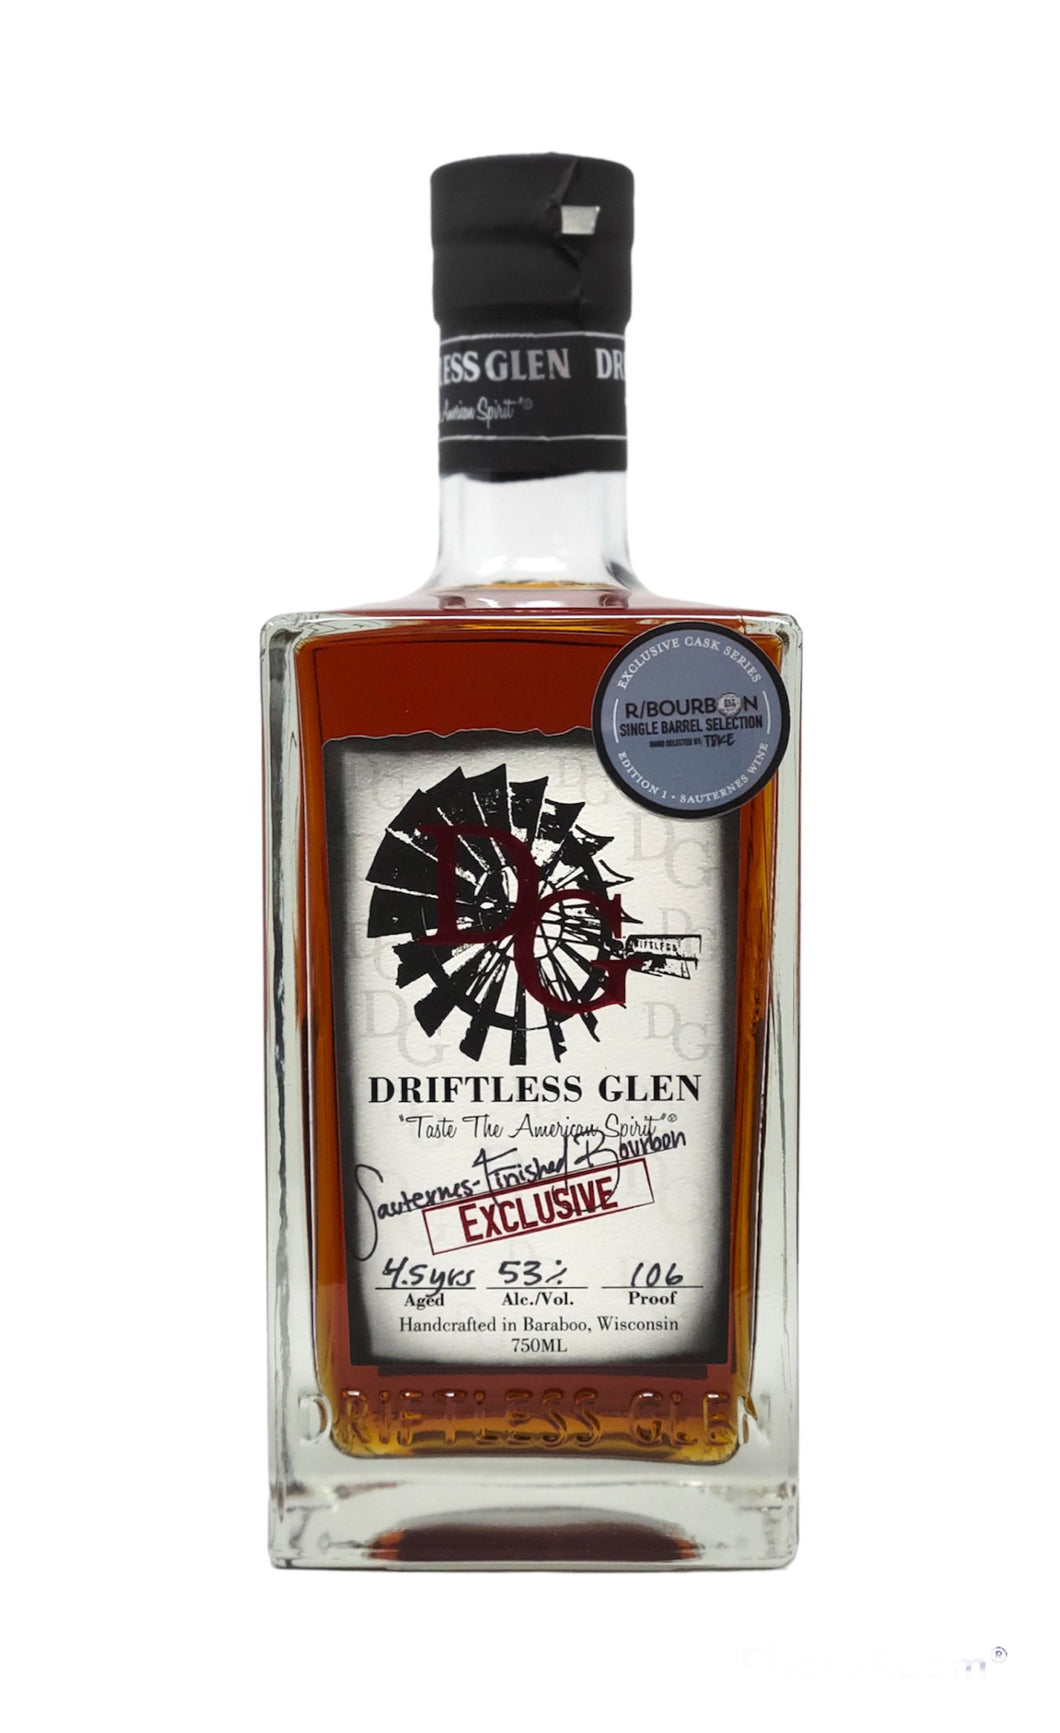 Drifless Glen Sauternes-Finished Bourbon Barrel #7403 - Selected by r/bourbon